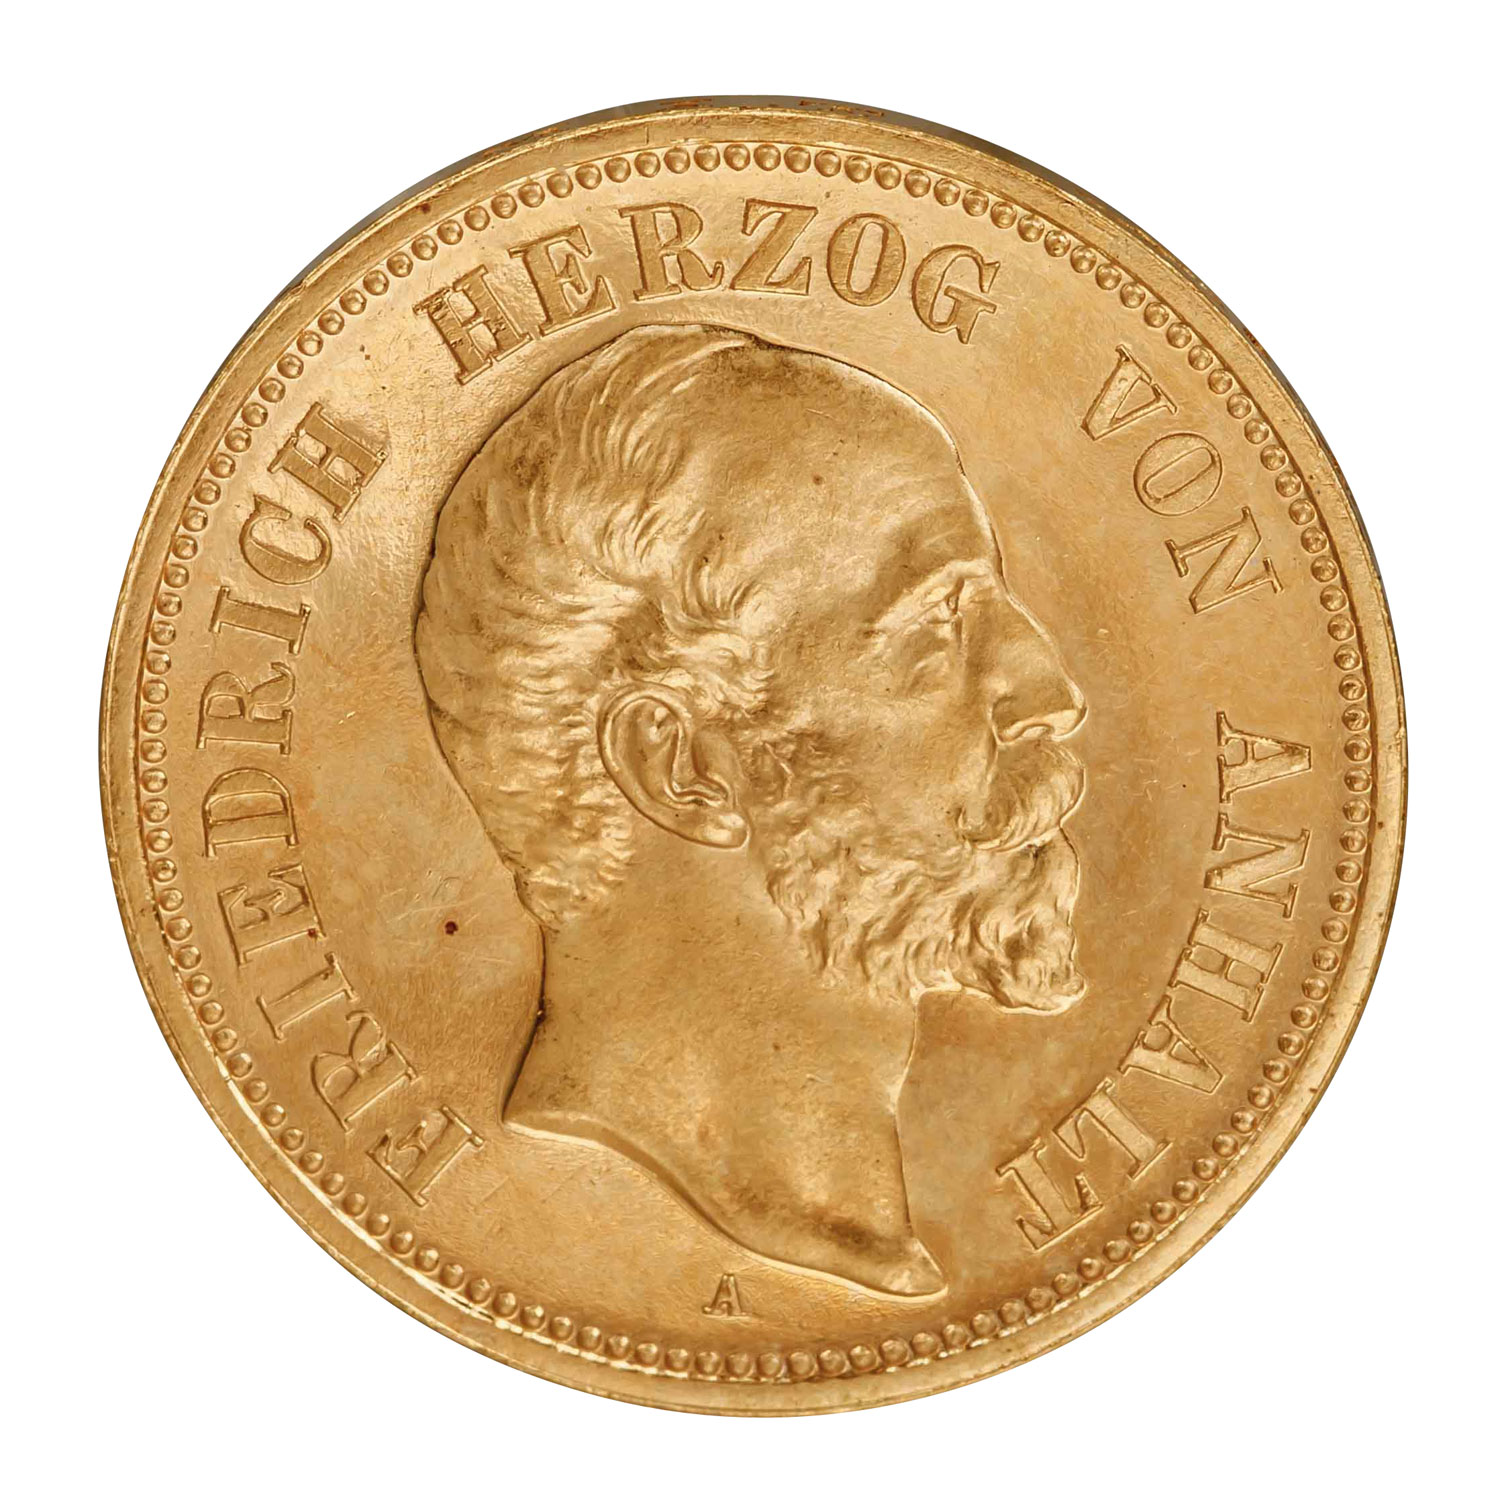 Herzogtum Anhalt/Gold - 20 Mark 1901/A, Herzog Friedrich I, - Image 2 of 3